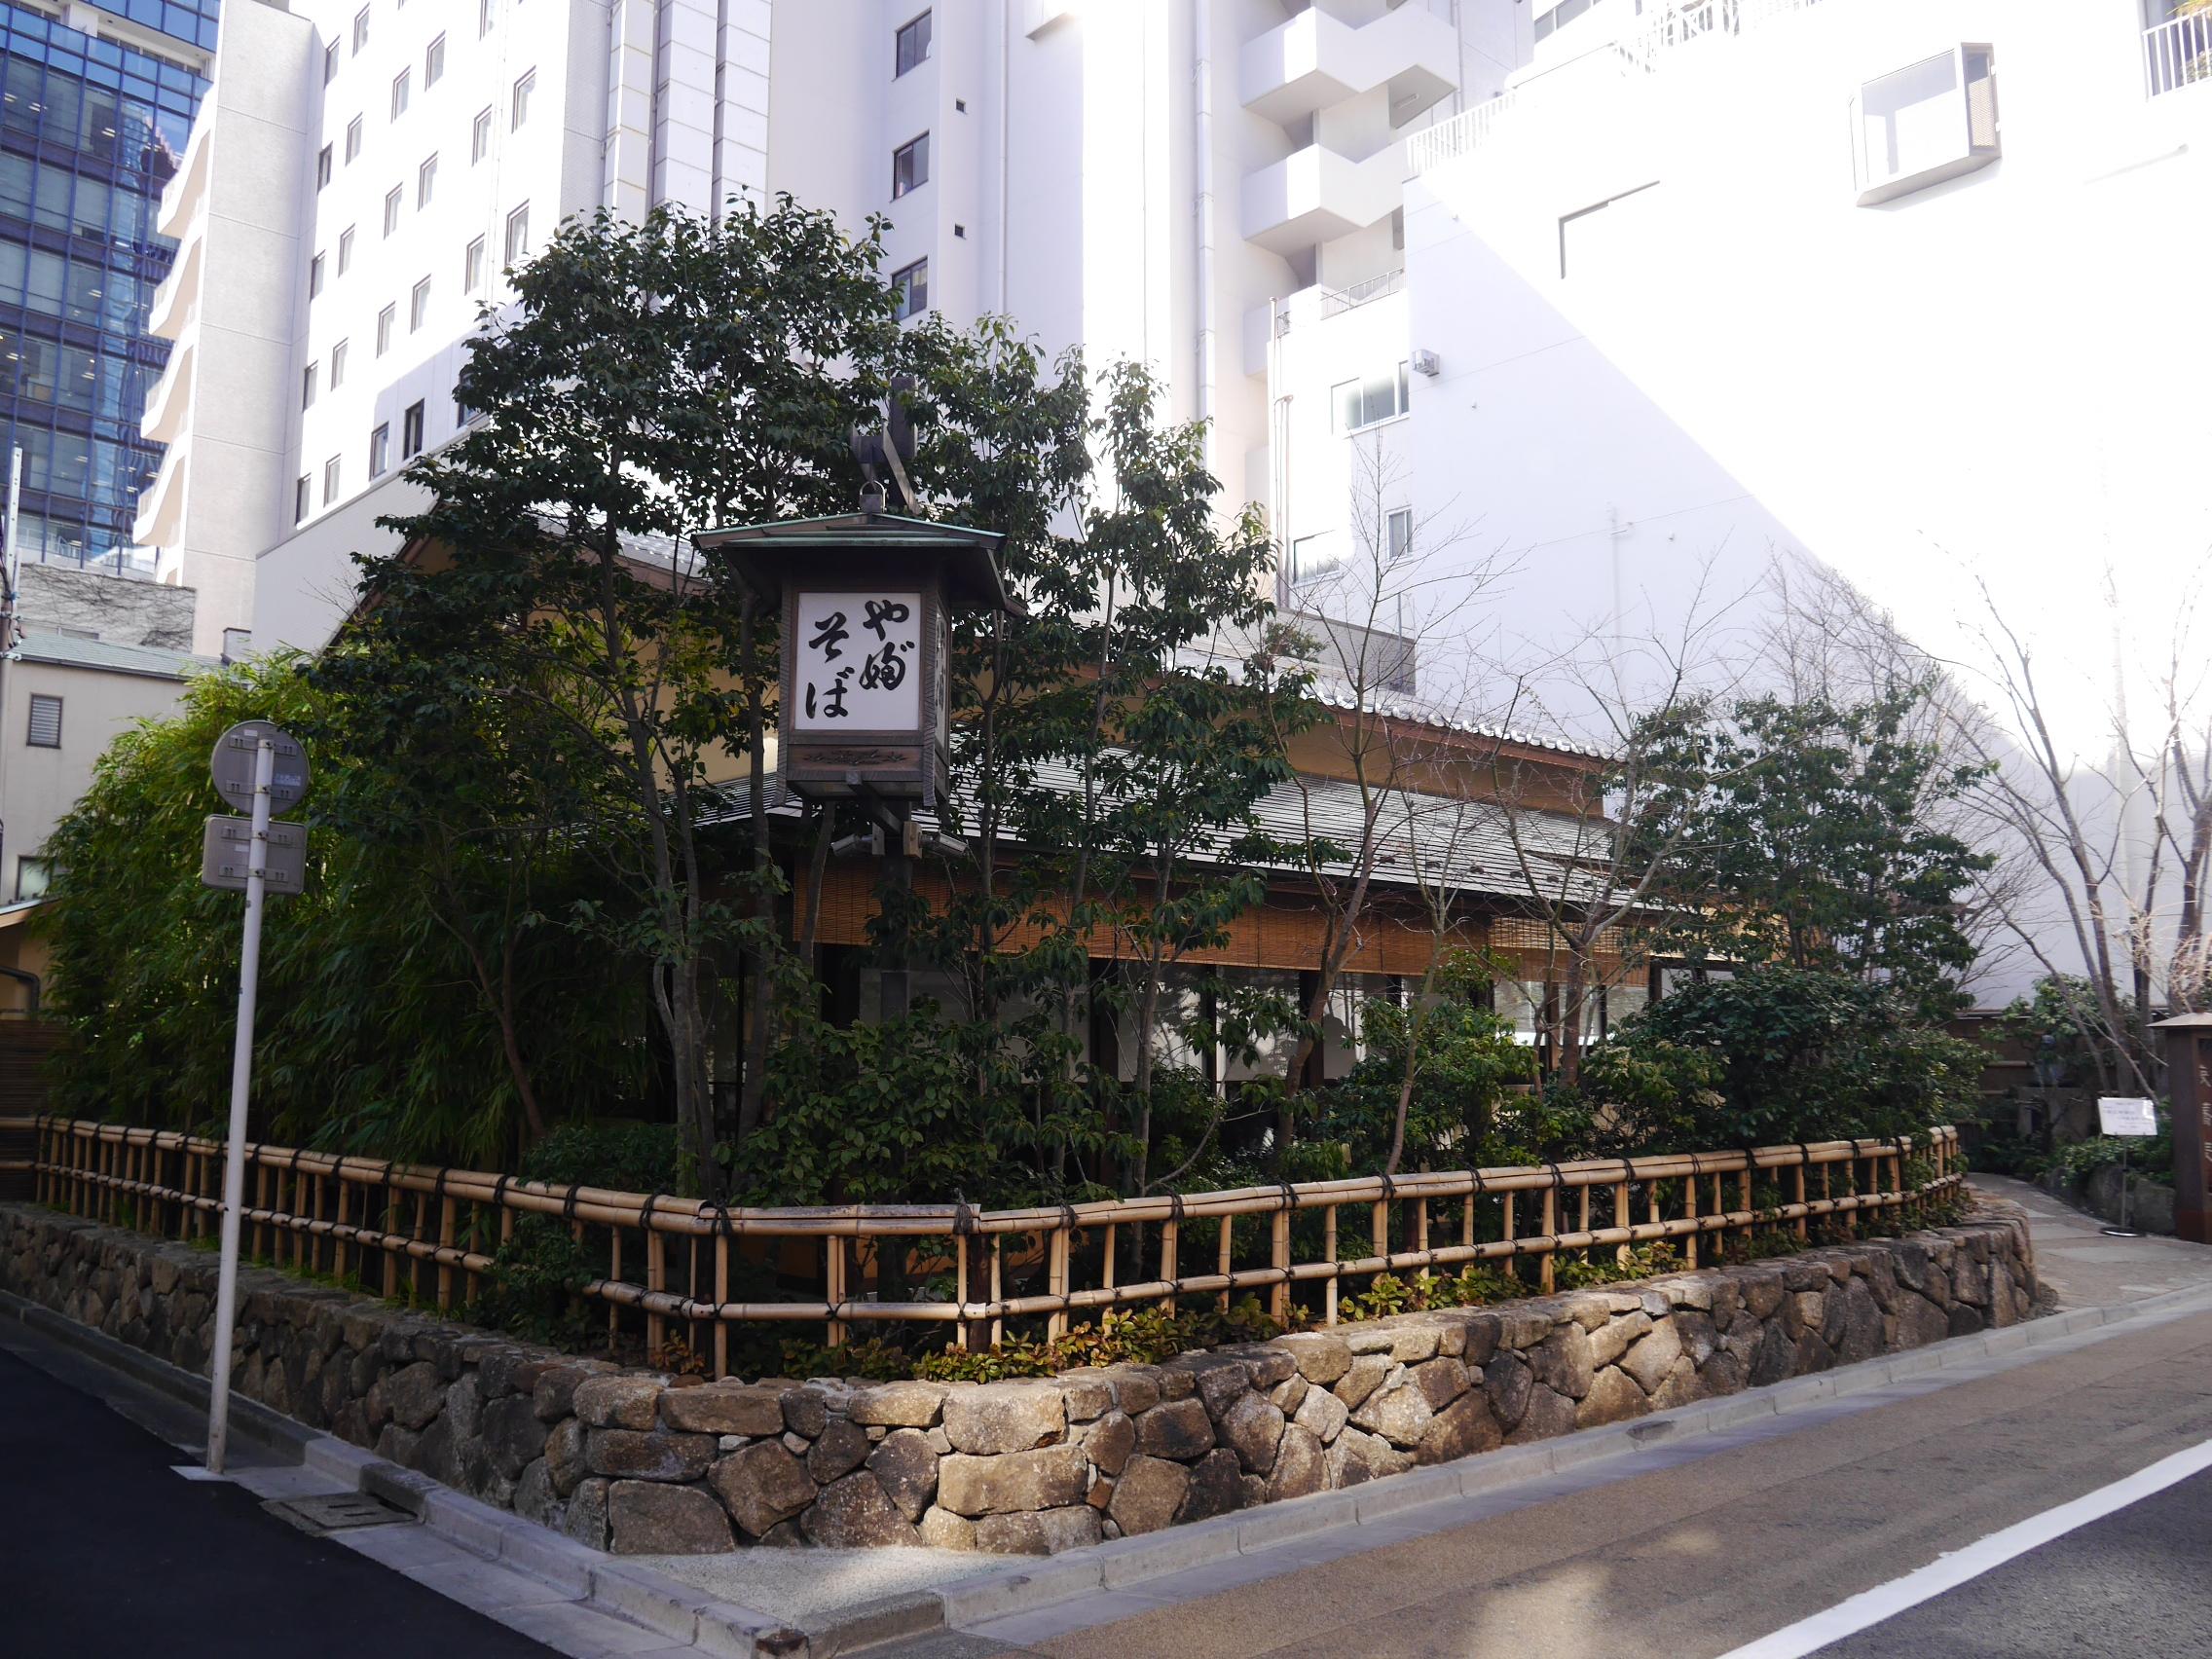 Cover image of this place Kanda Yabusoba (かんだやぶそば)